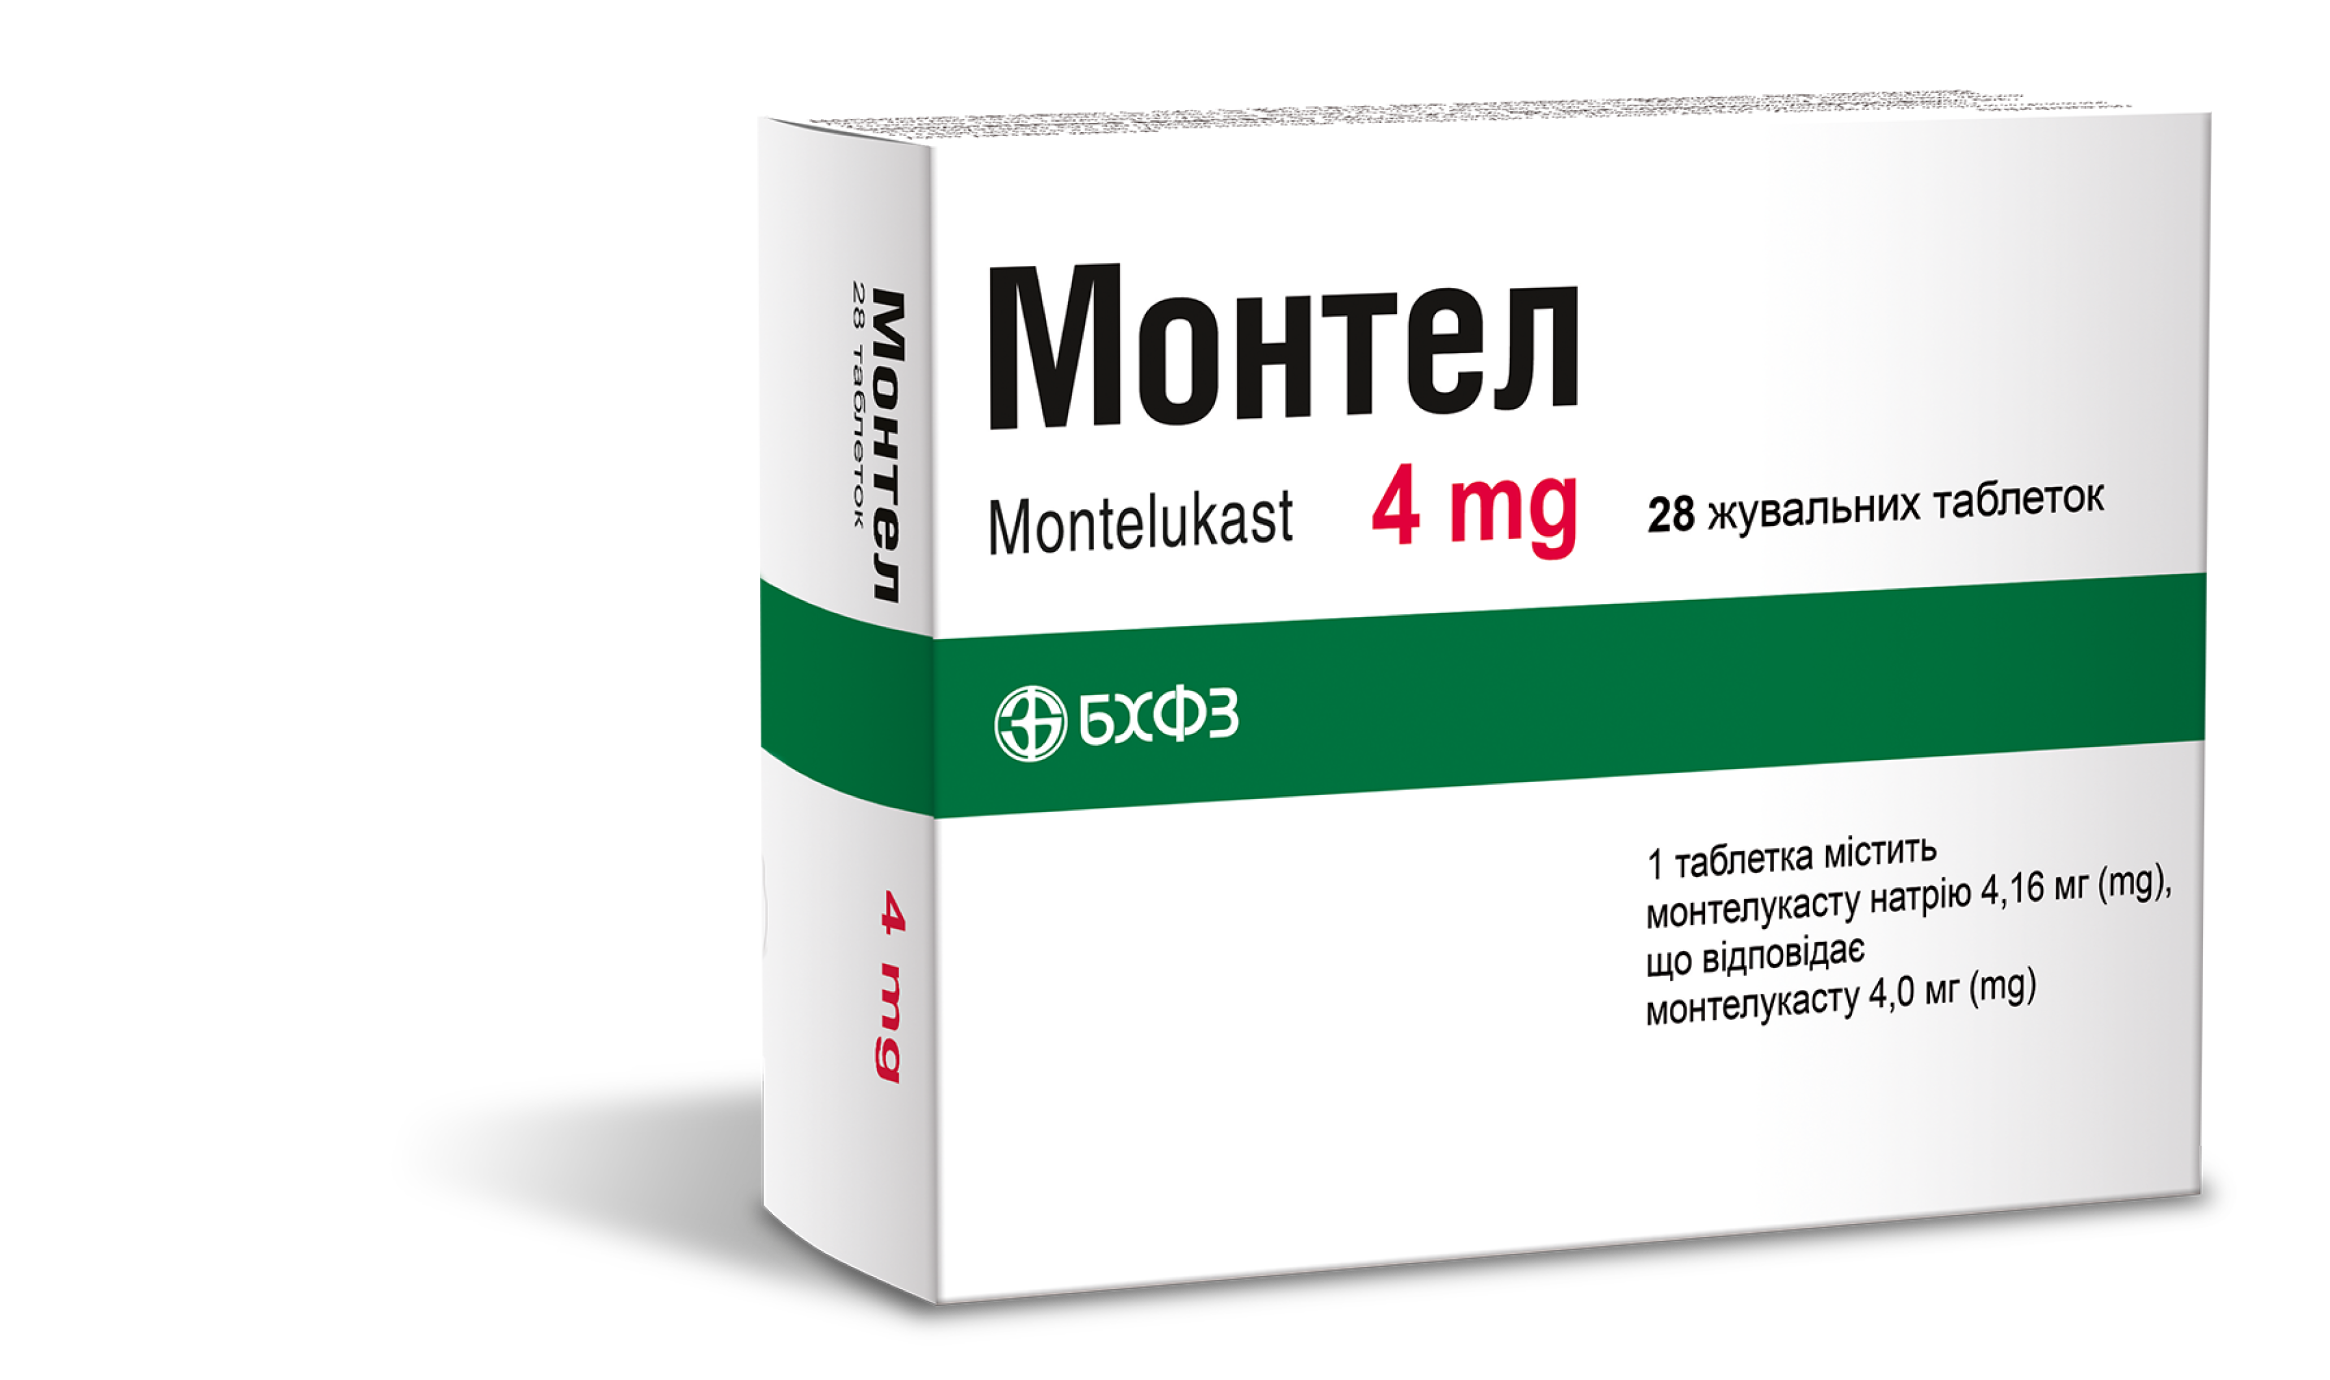 Монтел (4 мг) Montelukast / R03D C03